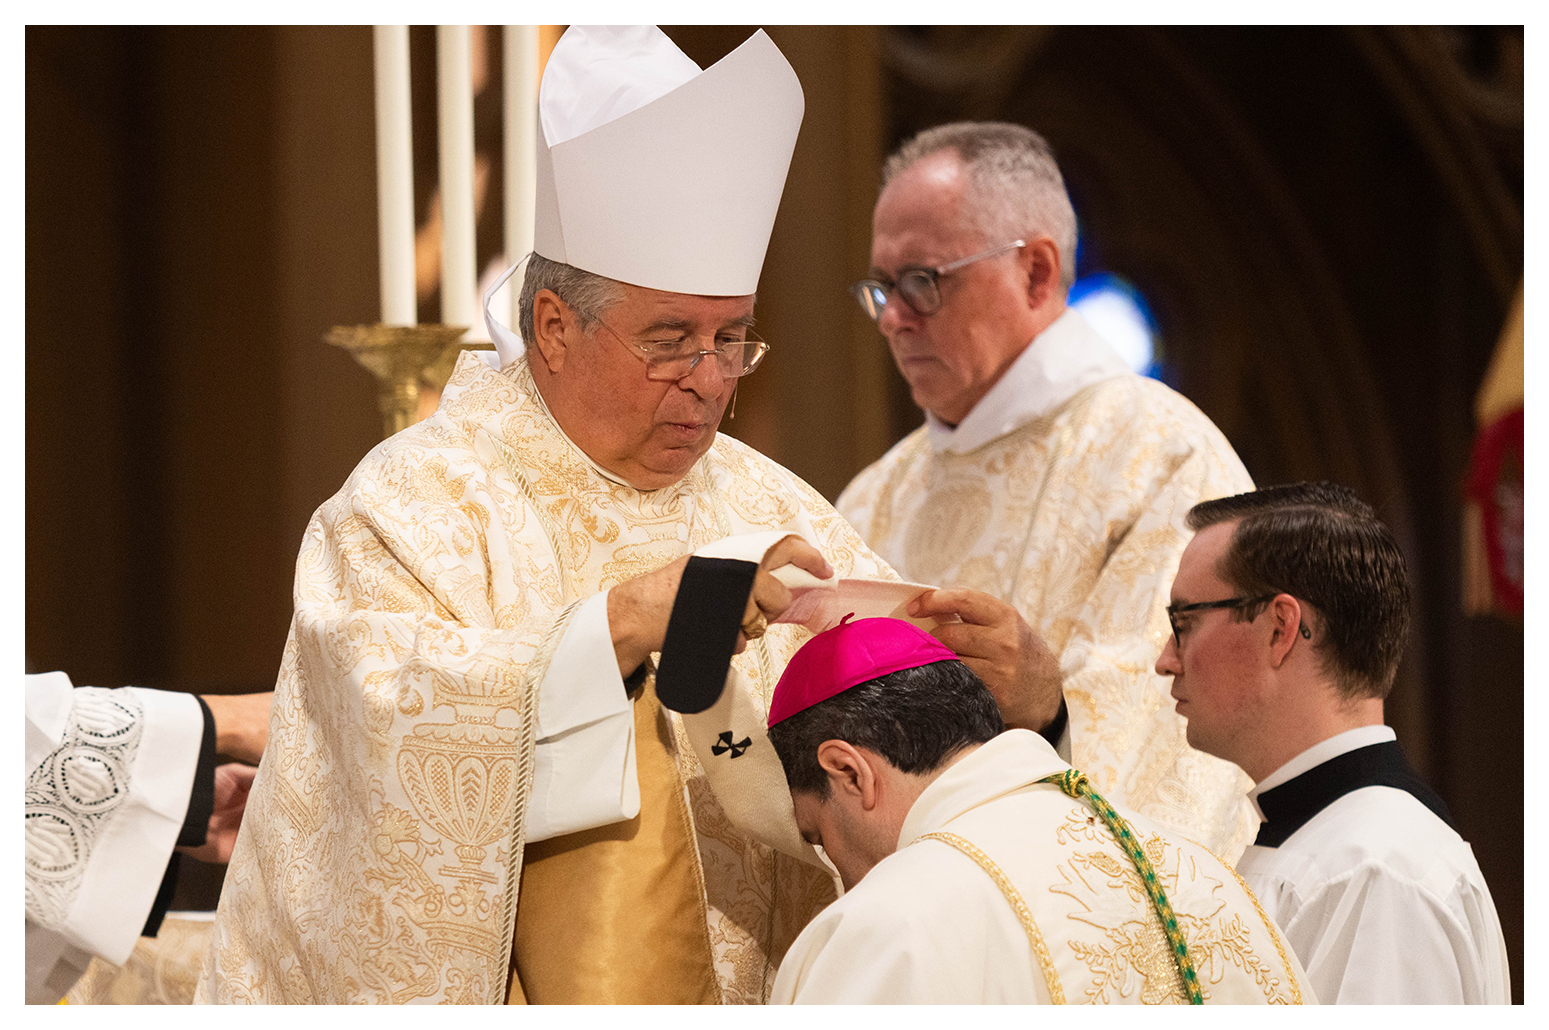 Archbishop Leo Receives the Pallium